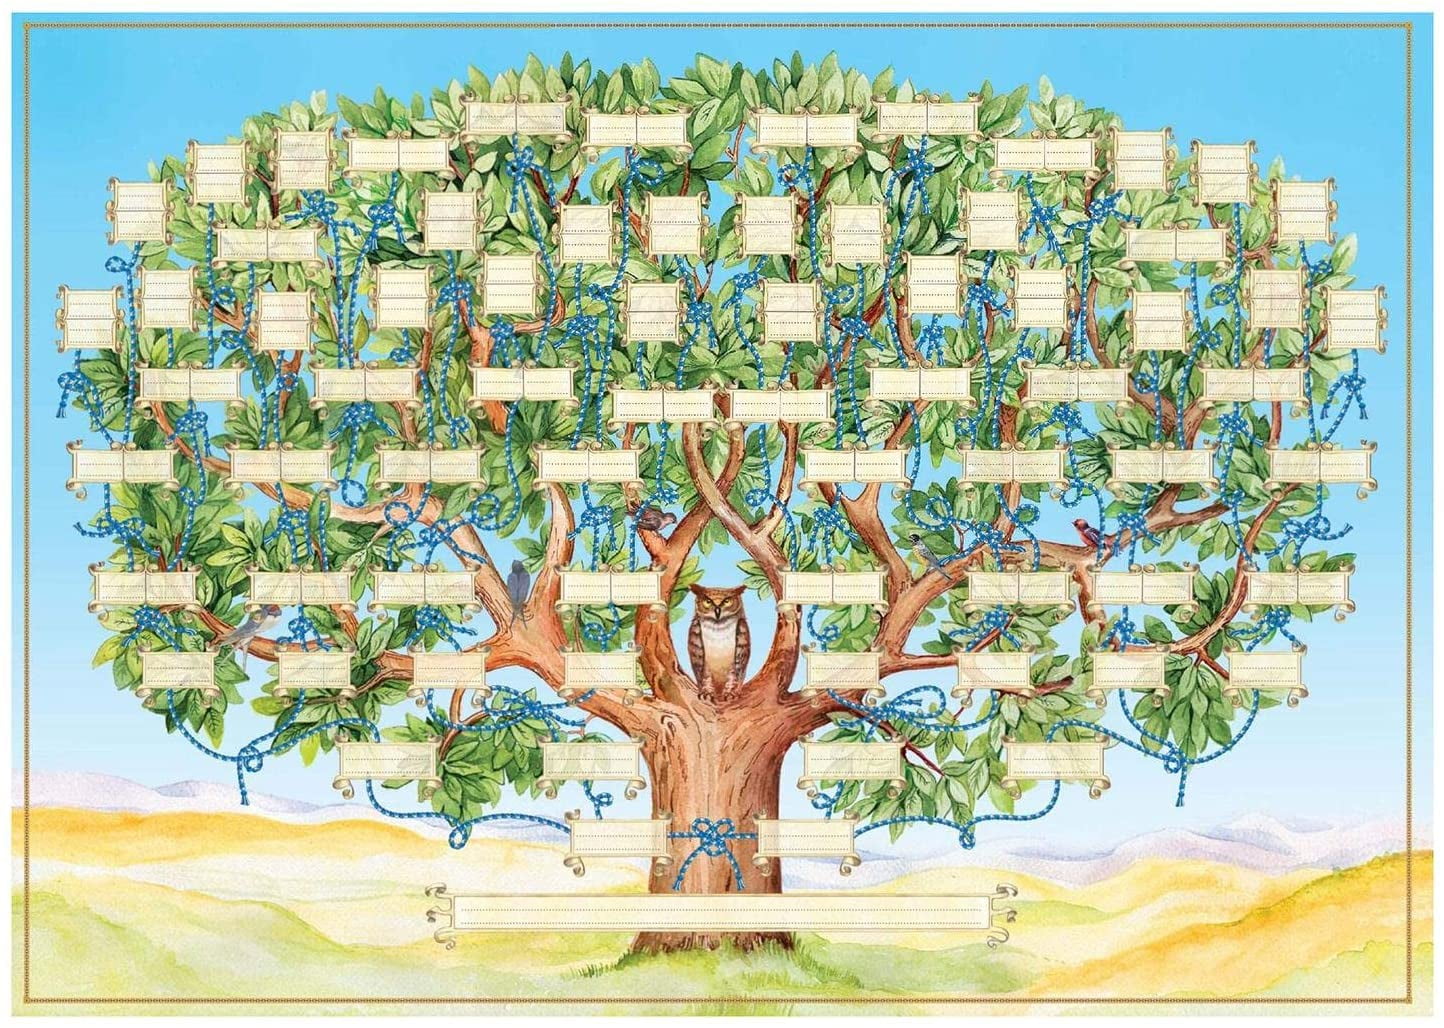 6 Generation Genealogy Notebook With 100 Ancestor Details Sheet: Ancestry  Tree Organizer, Family Pedigree Chart, Genealogy Workbooks With Charts